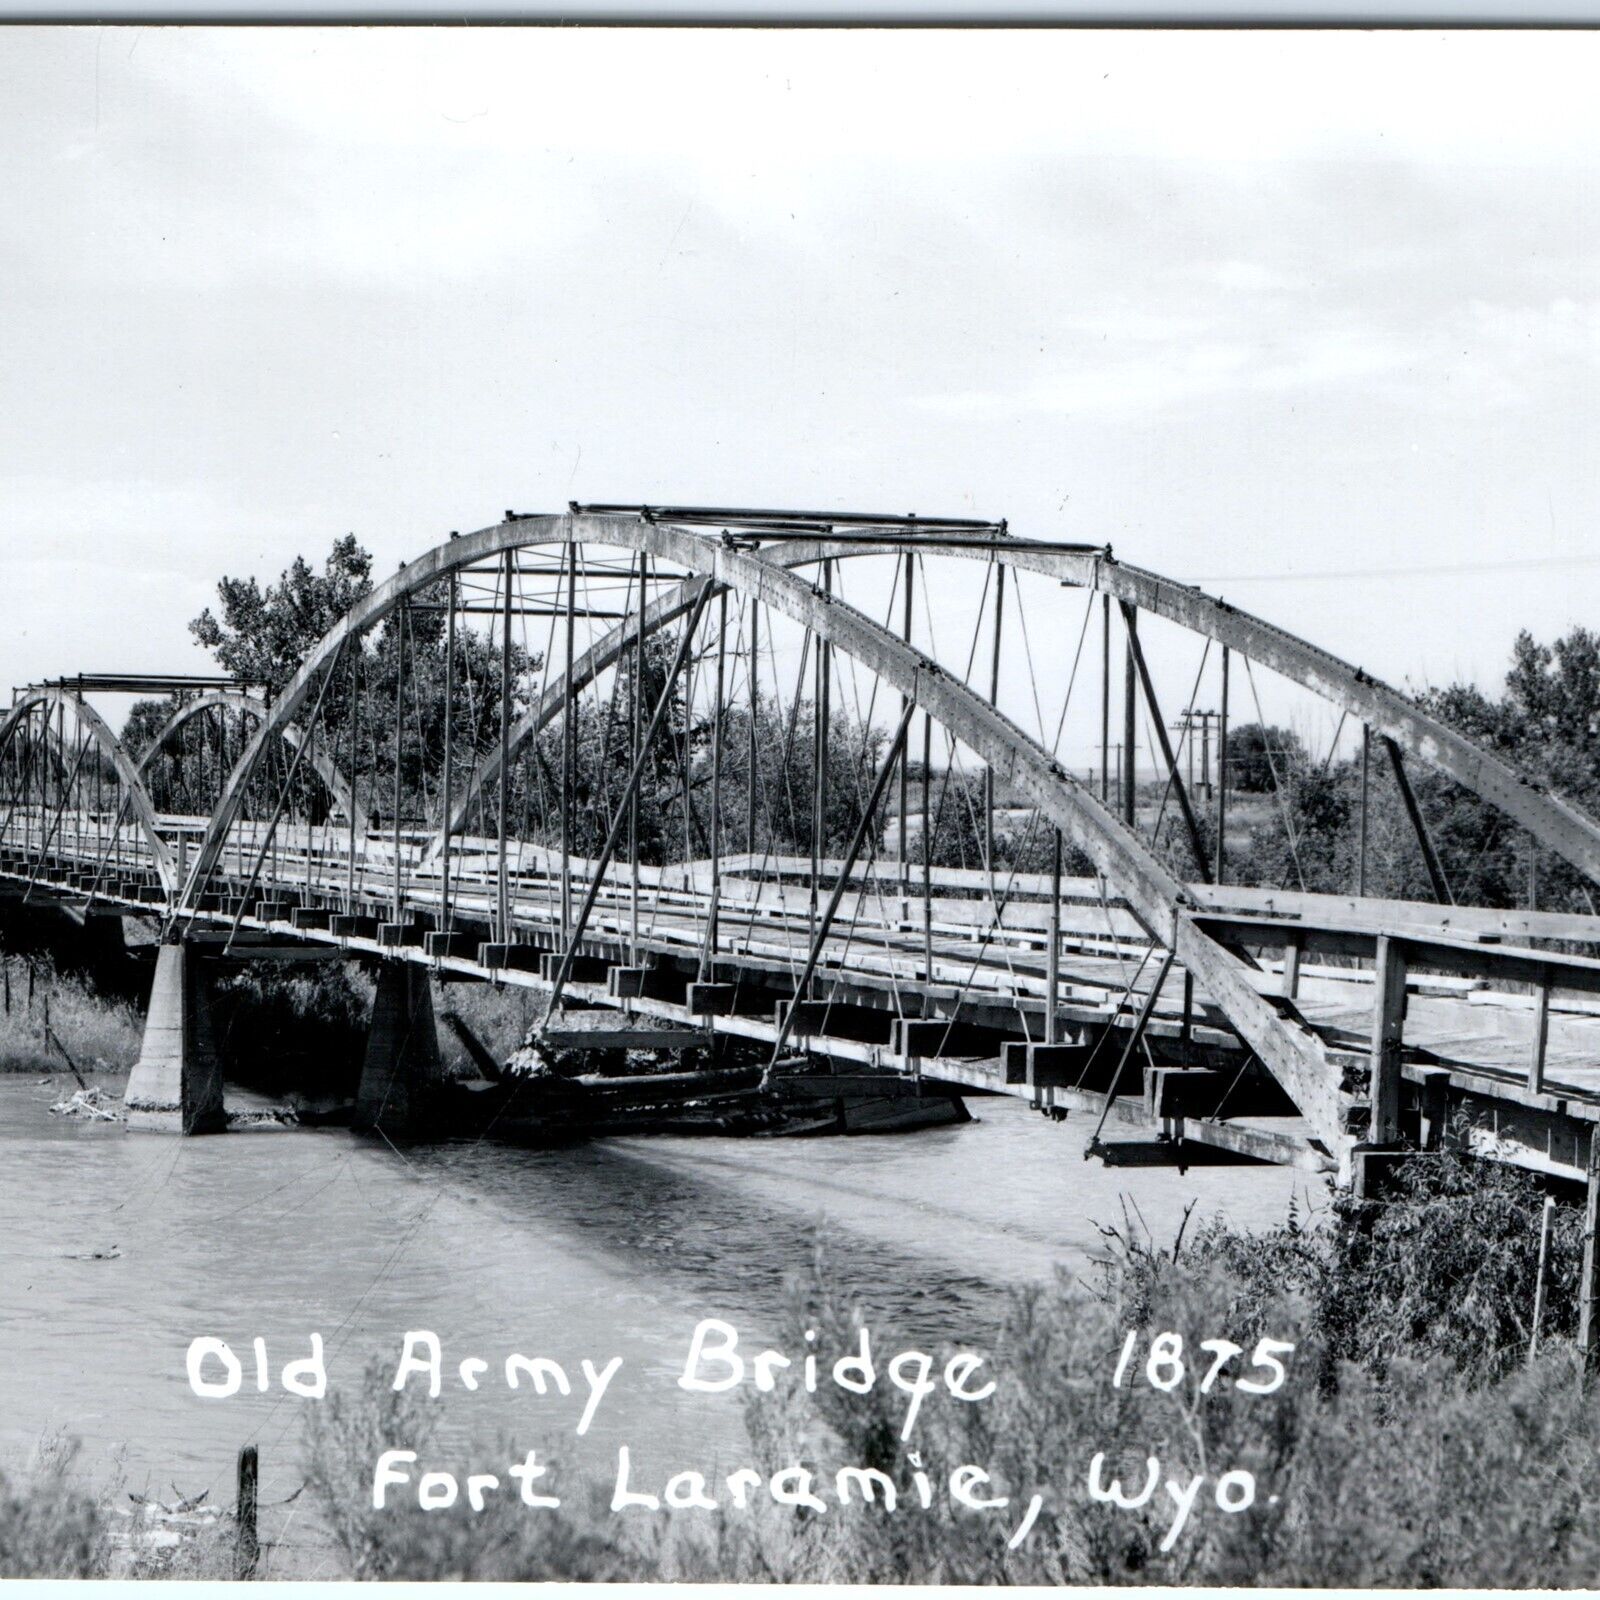 c1940s Fort Laramie, Wyo RPPC 1875 Old Army Bridge Real Photo Postcard WY A93